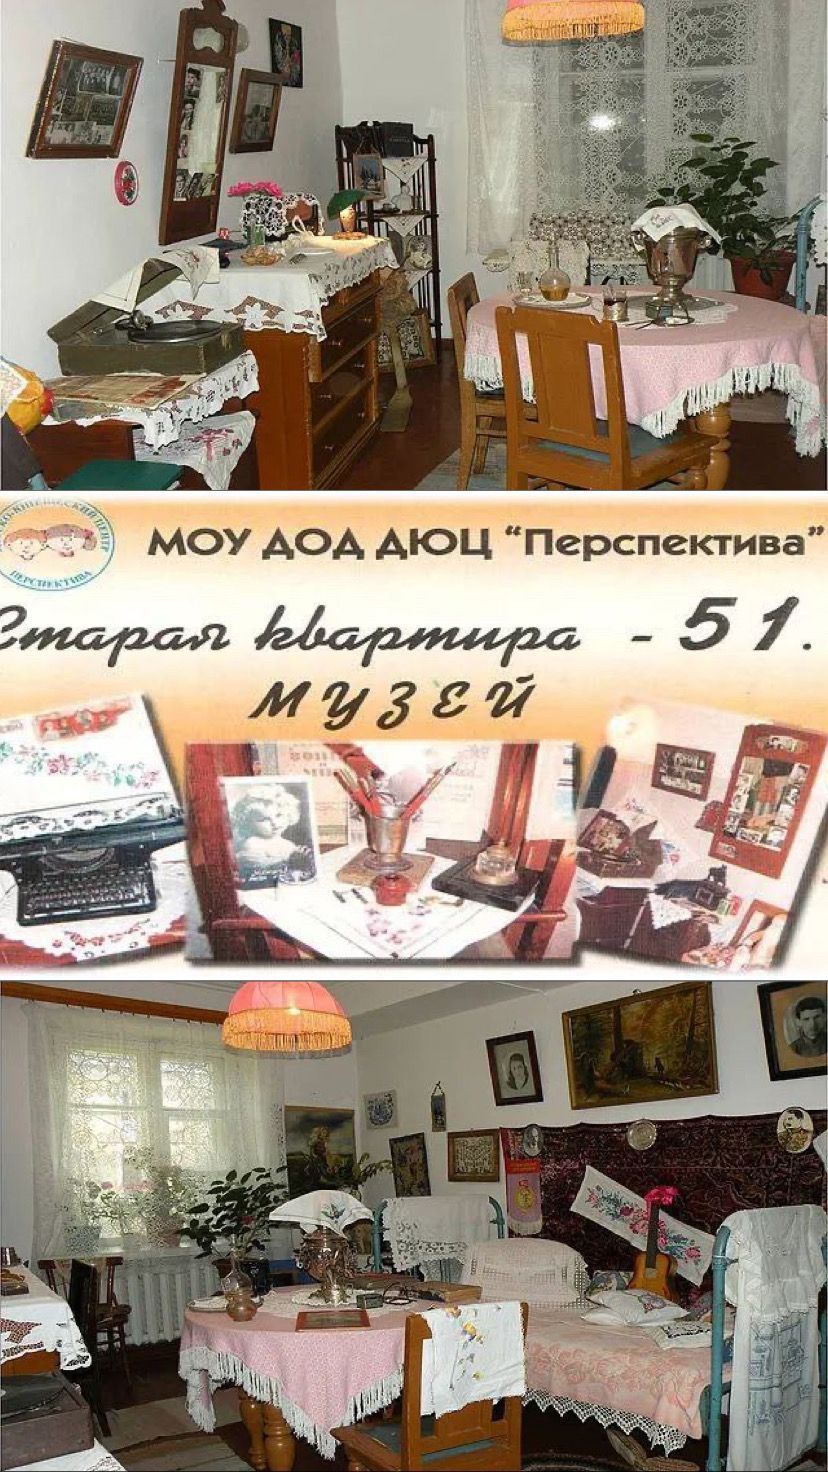 Музей «Старая квартира - 1951»